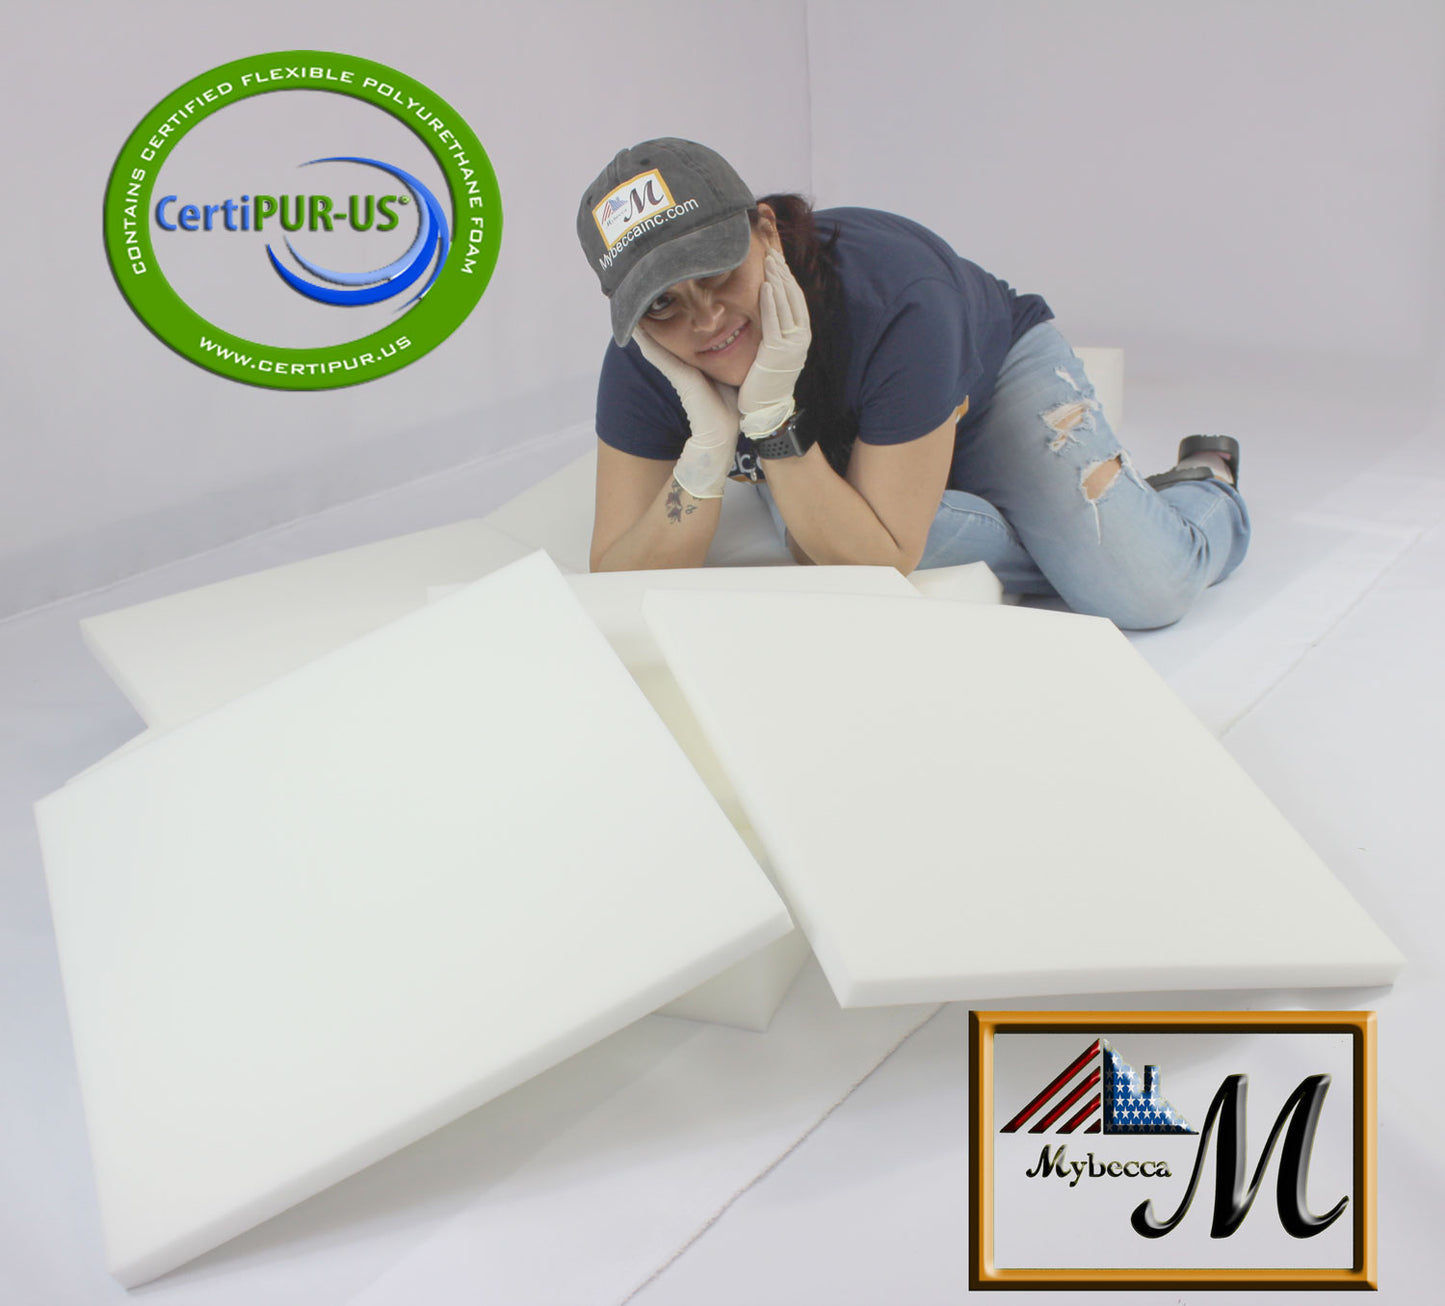 Mybecca 1" x 24" x 72" High Density Upholstery Foam Cushion (Seat Replacement, Upholstery Sheet, Foam Padding)